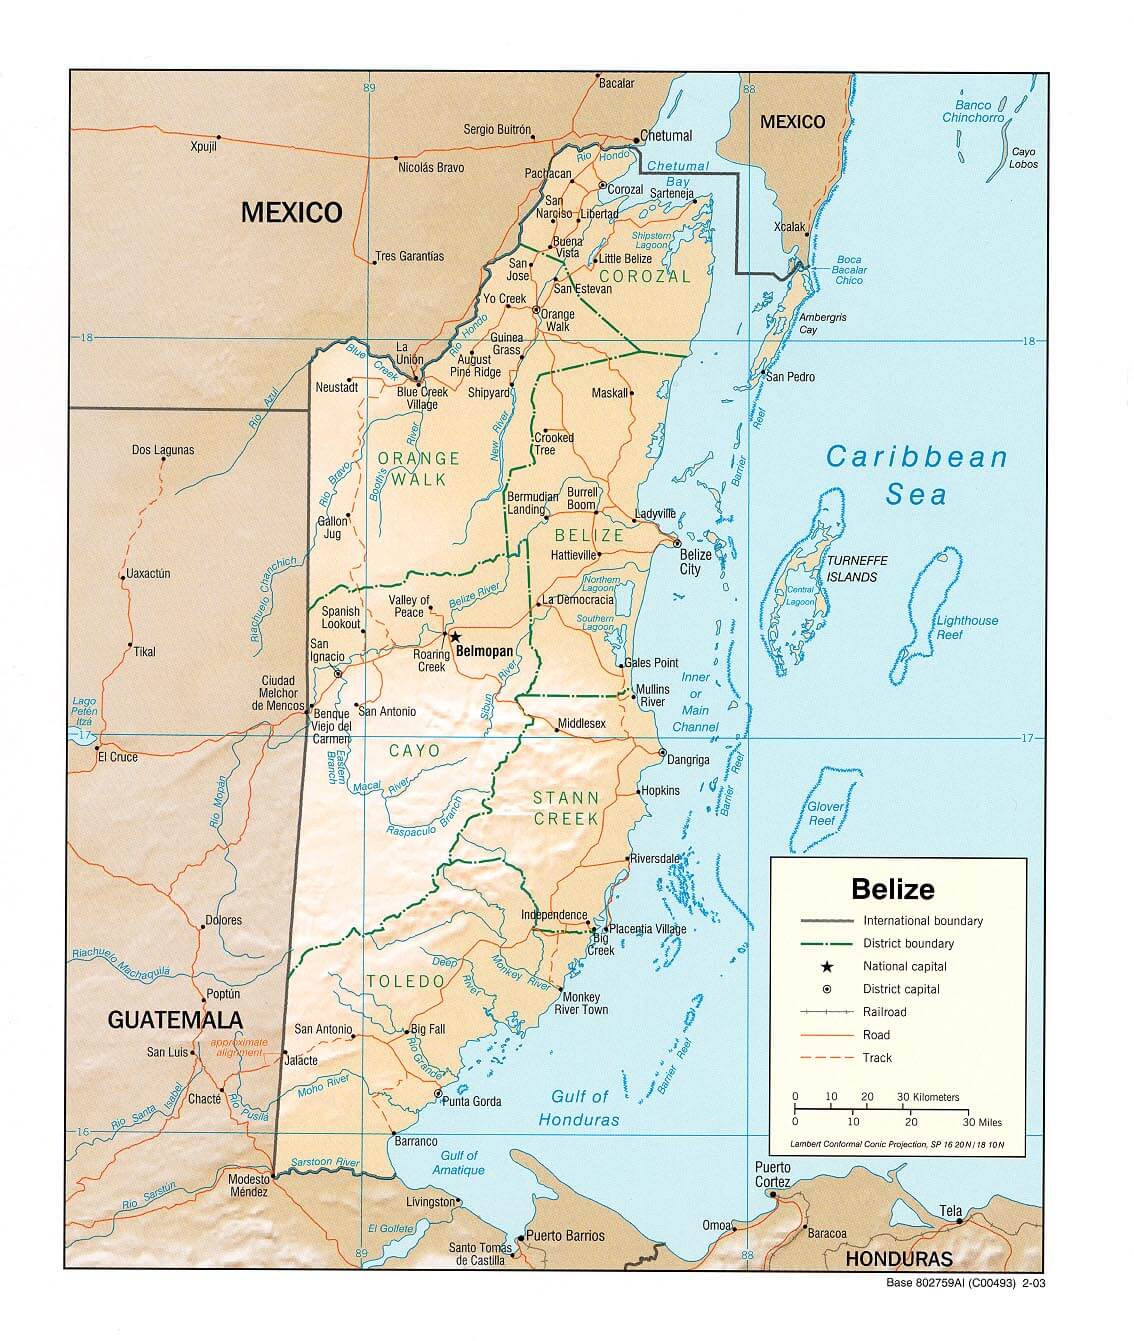 Belize linderung Map